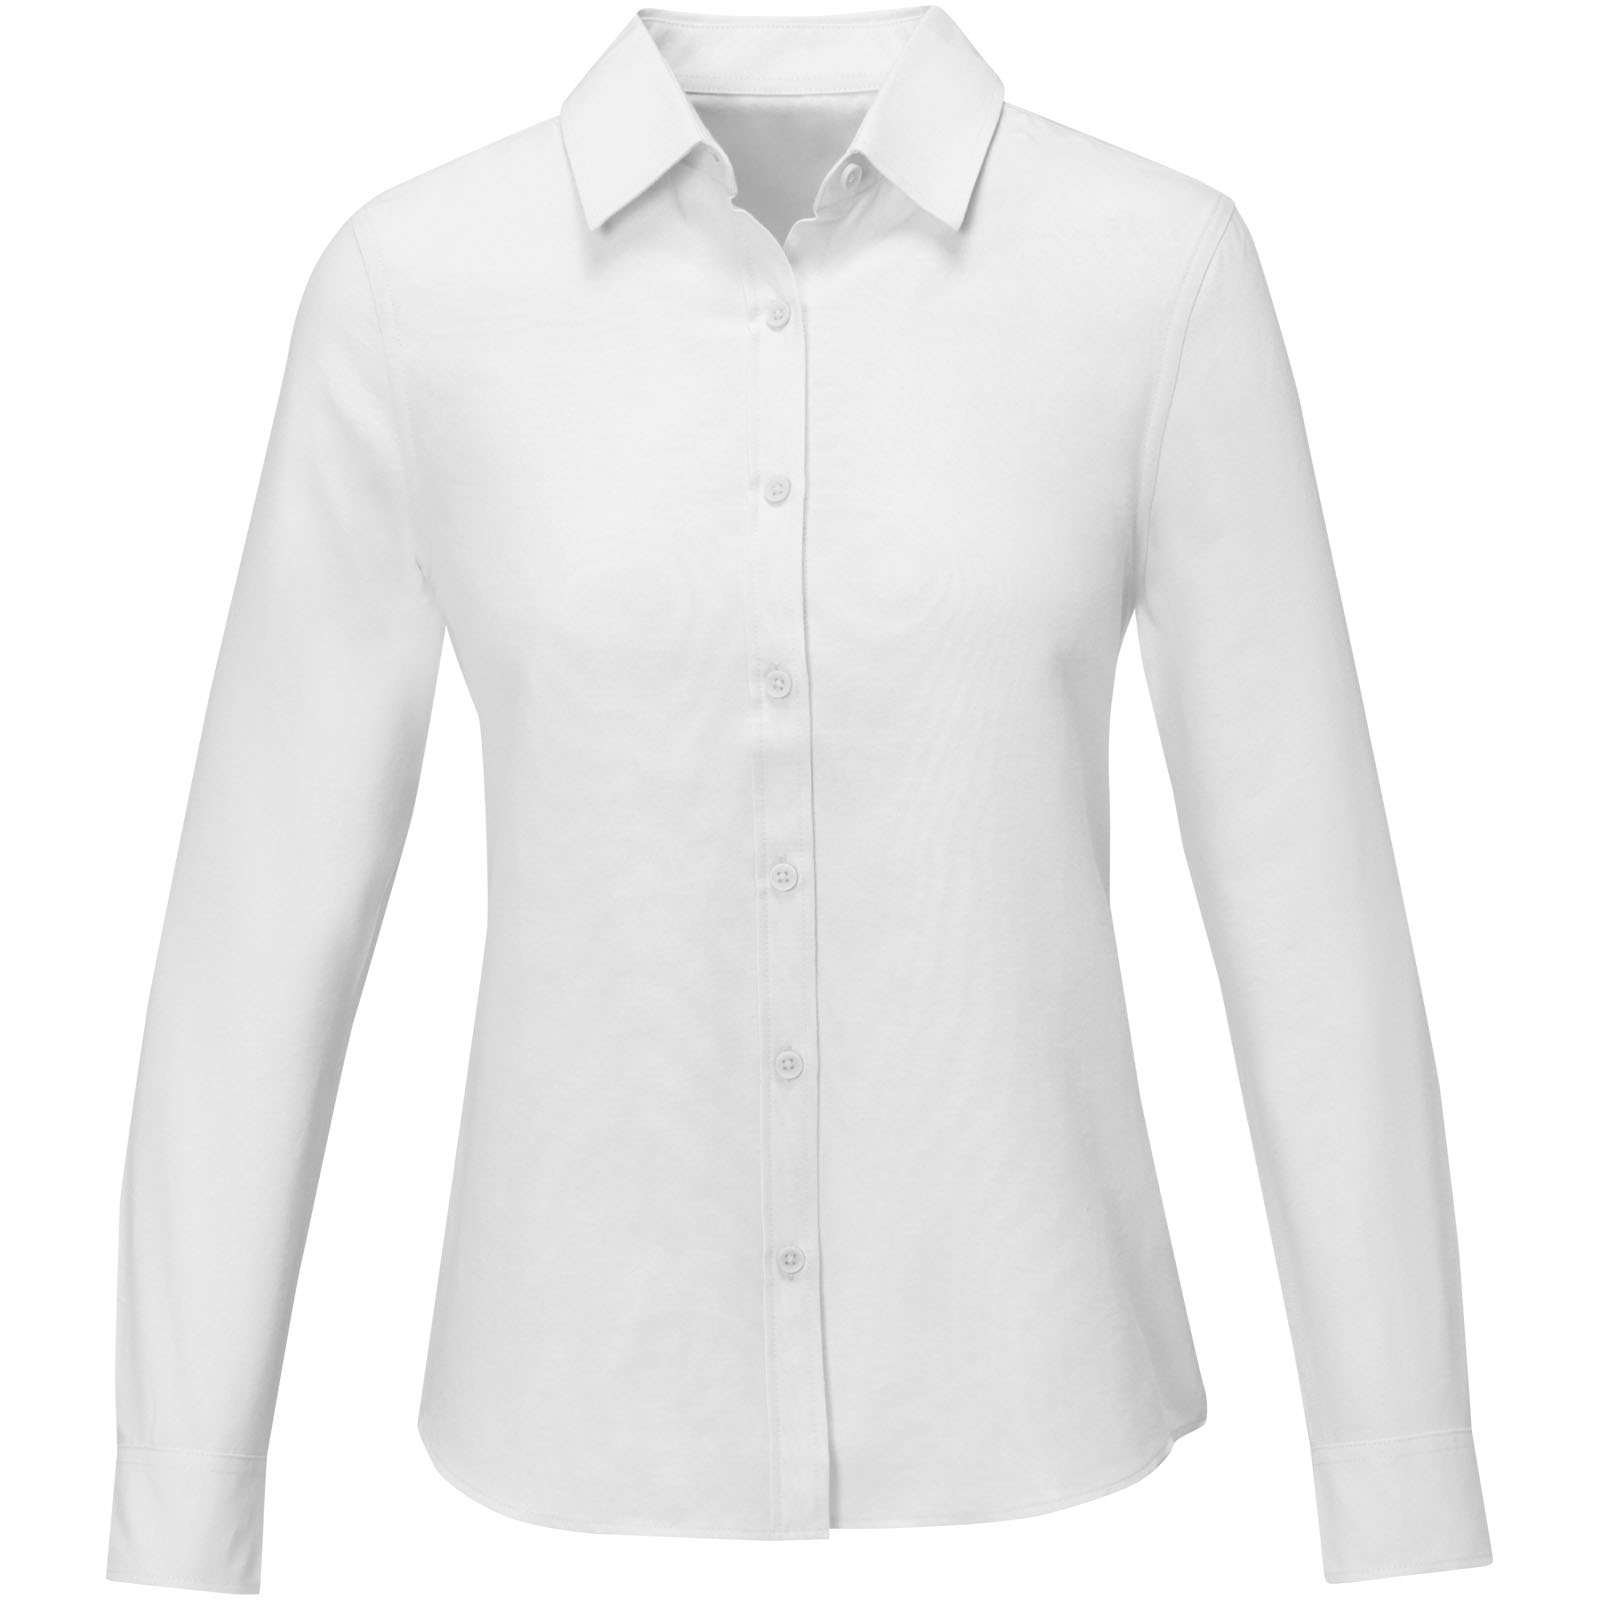 Advertising Shirts - Pollux long sleeve women's shirt - 1